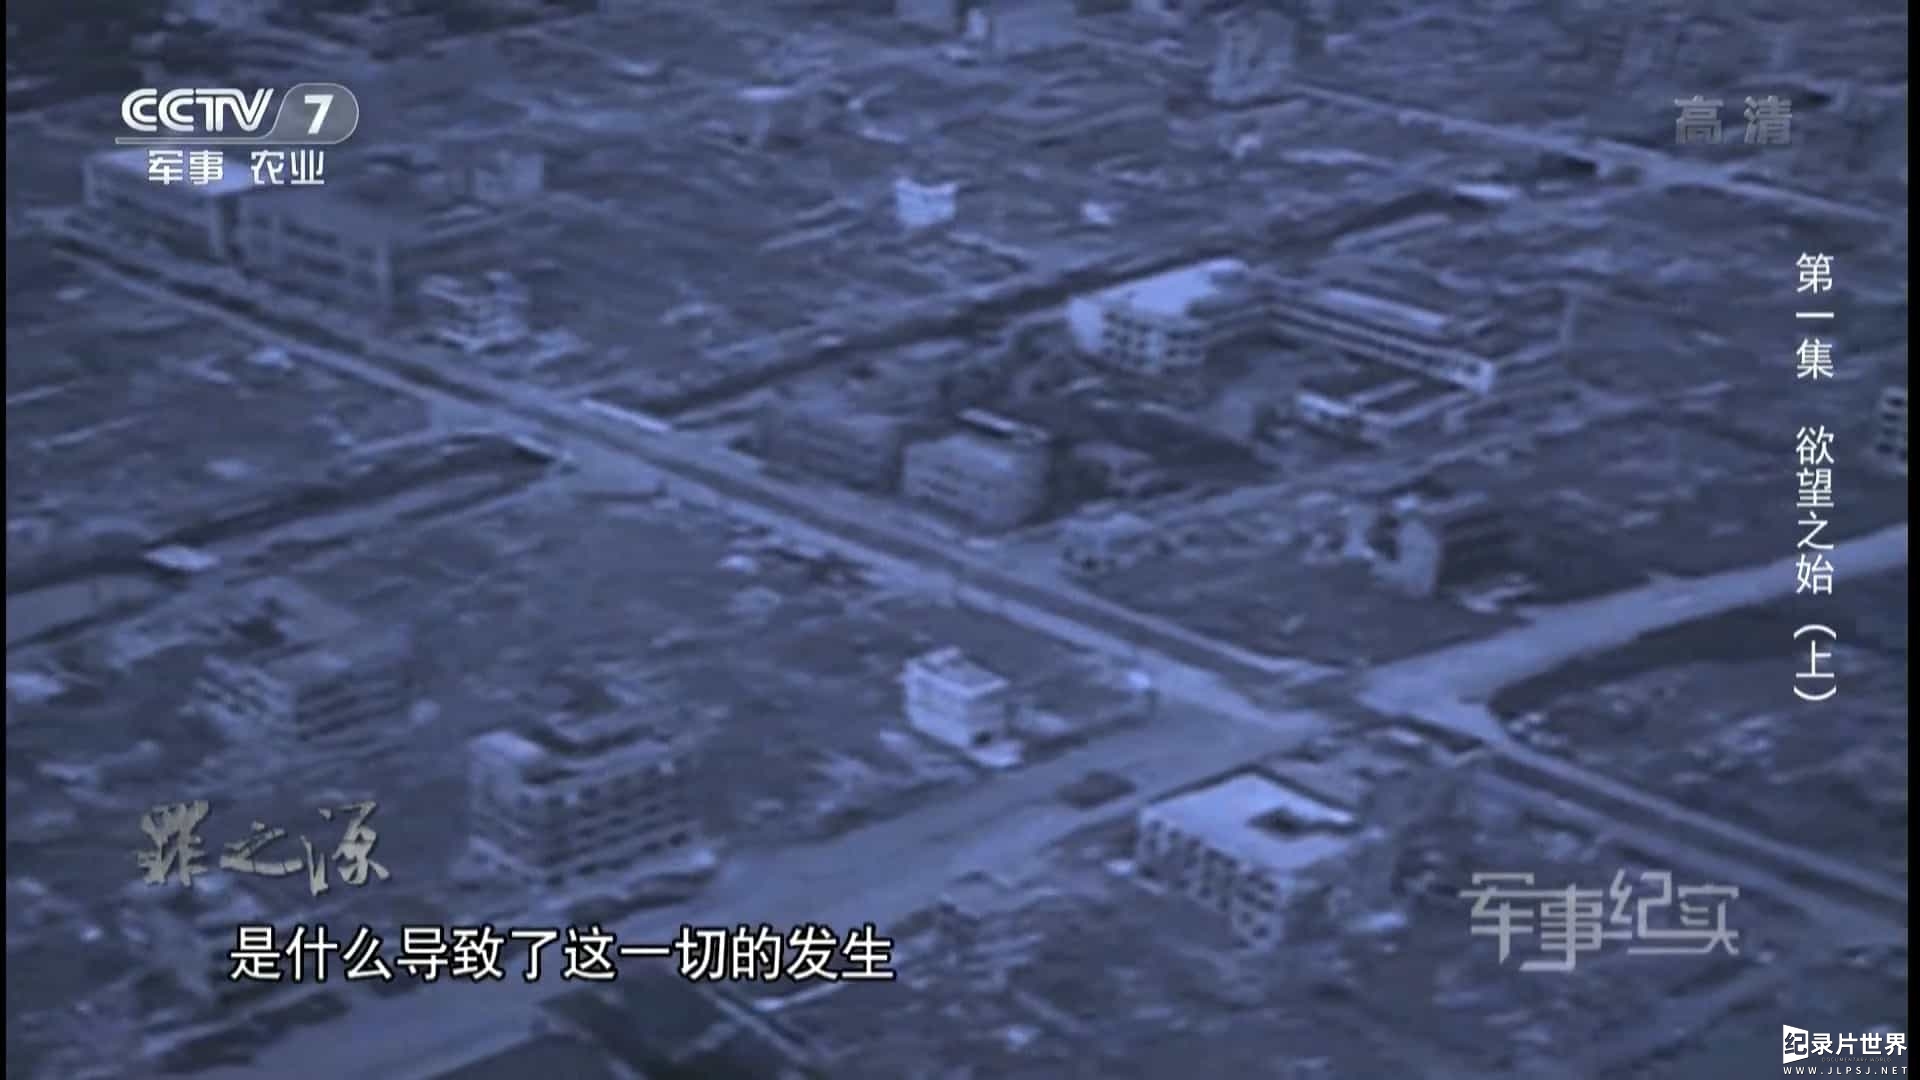 20160912_CCTV-7_Documentary